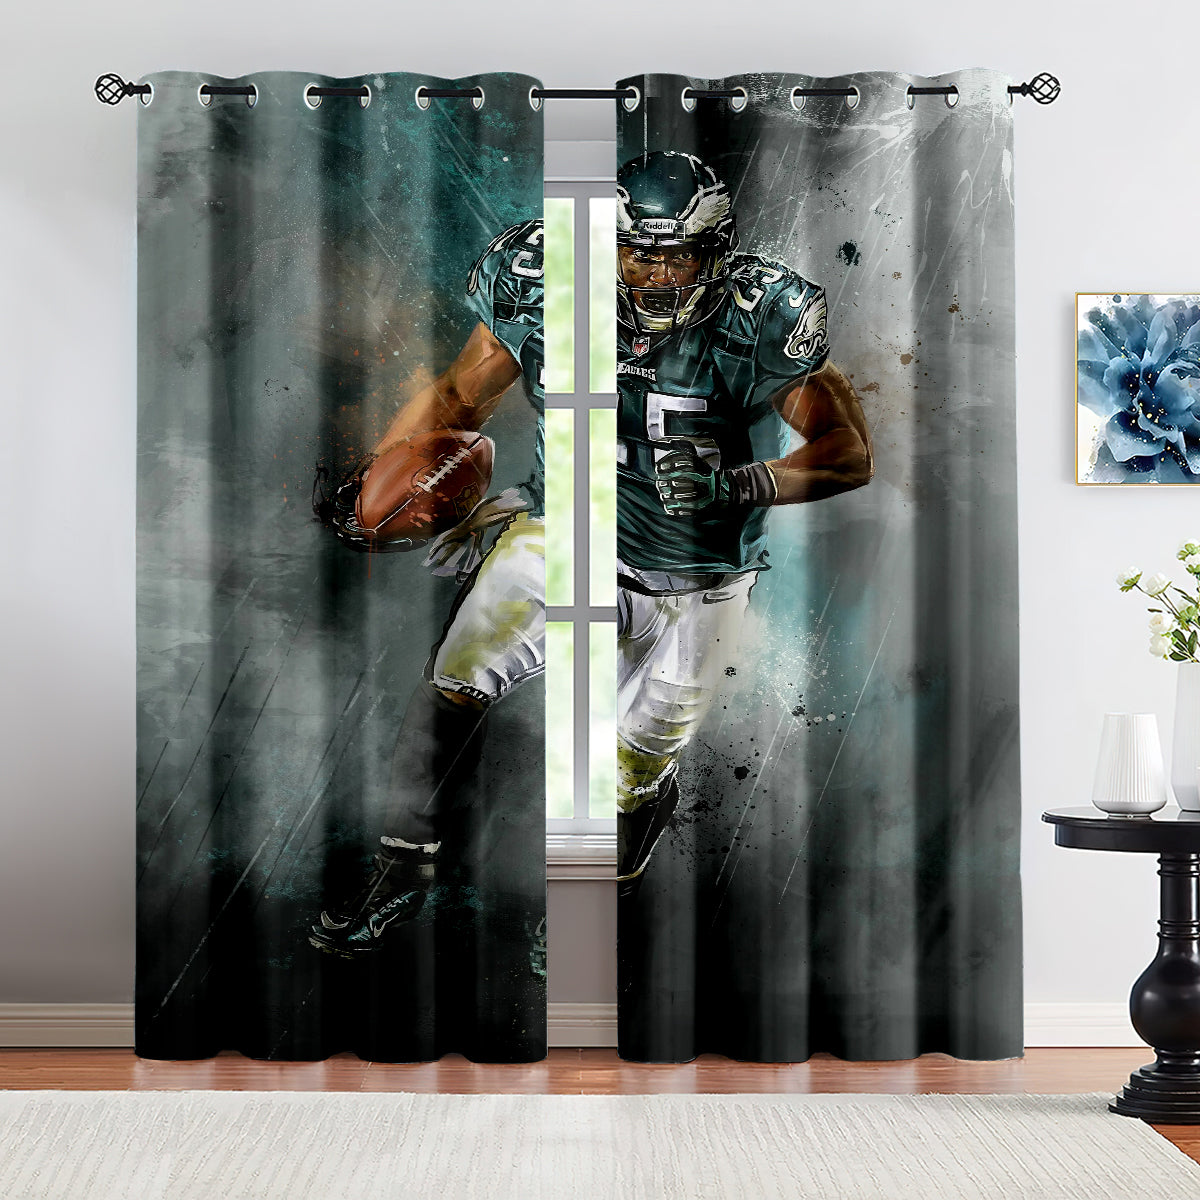 Philadelphia Eagles Football League Curtains Blackout Window Treatments Drapes Room Decor